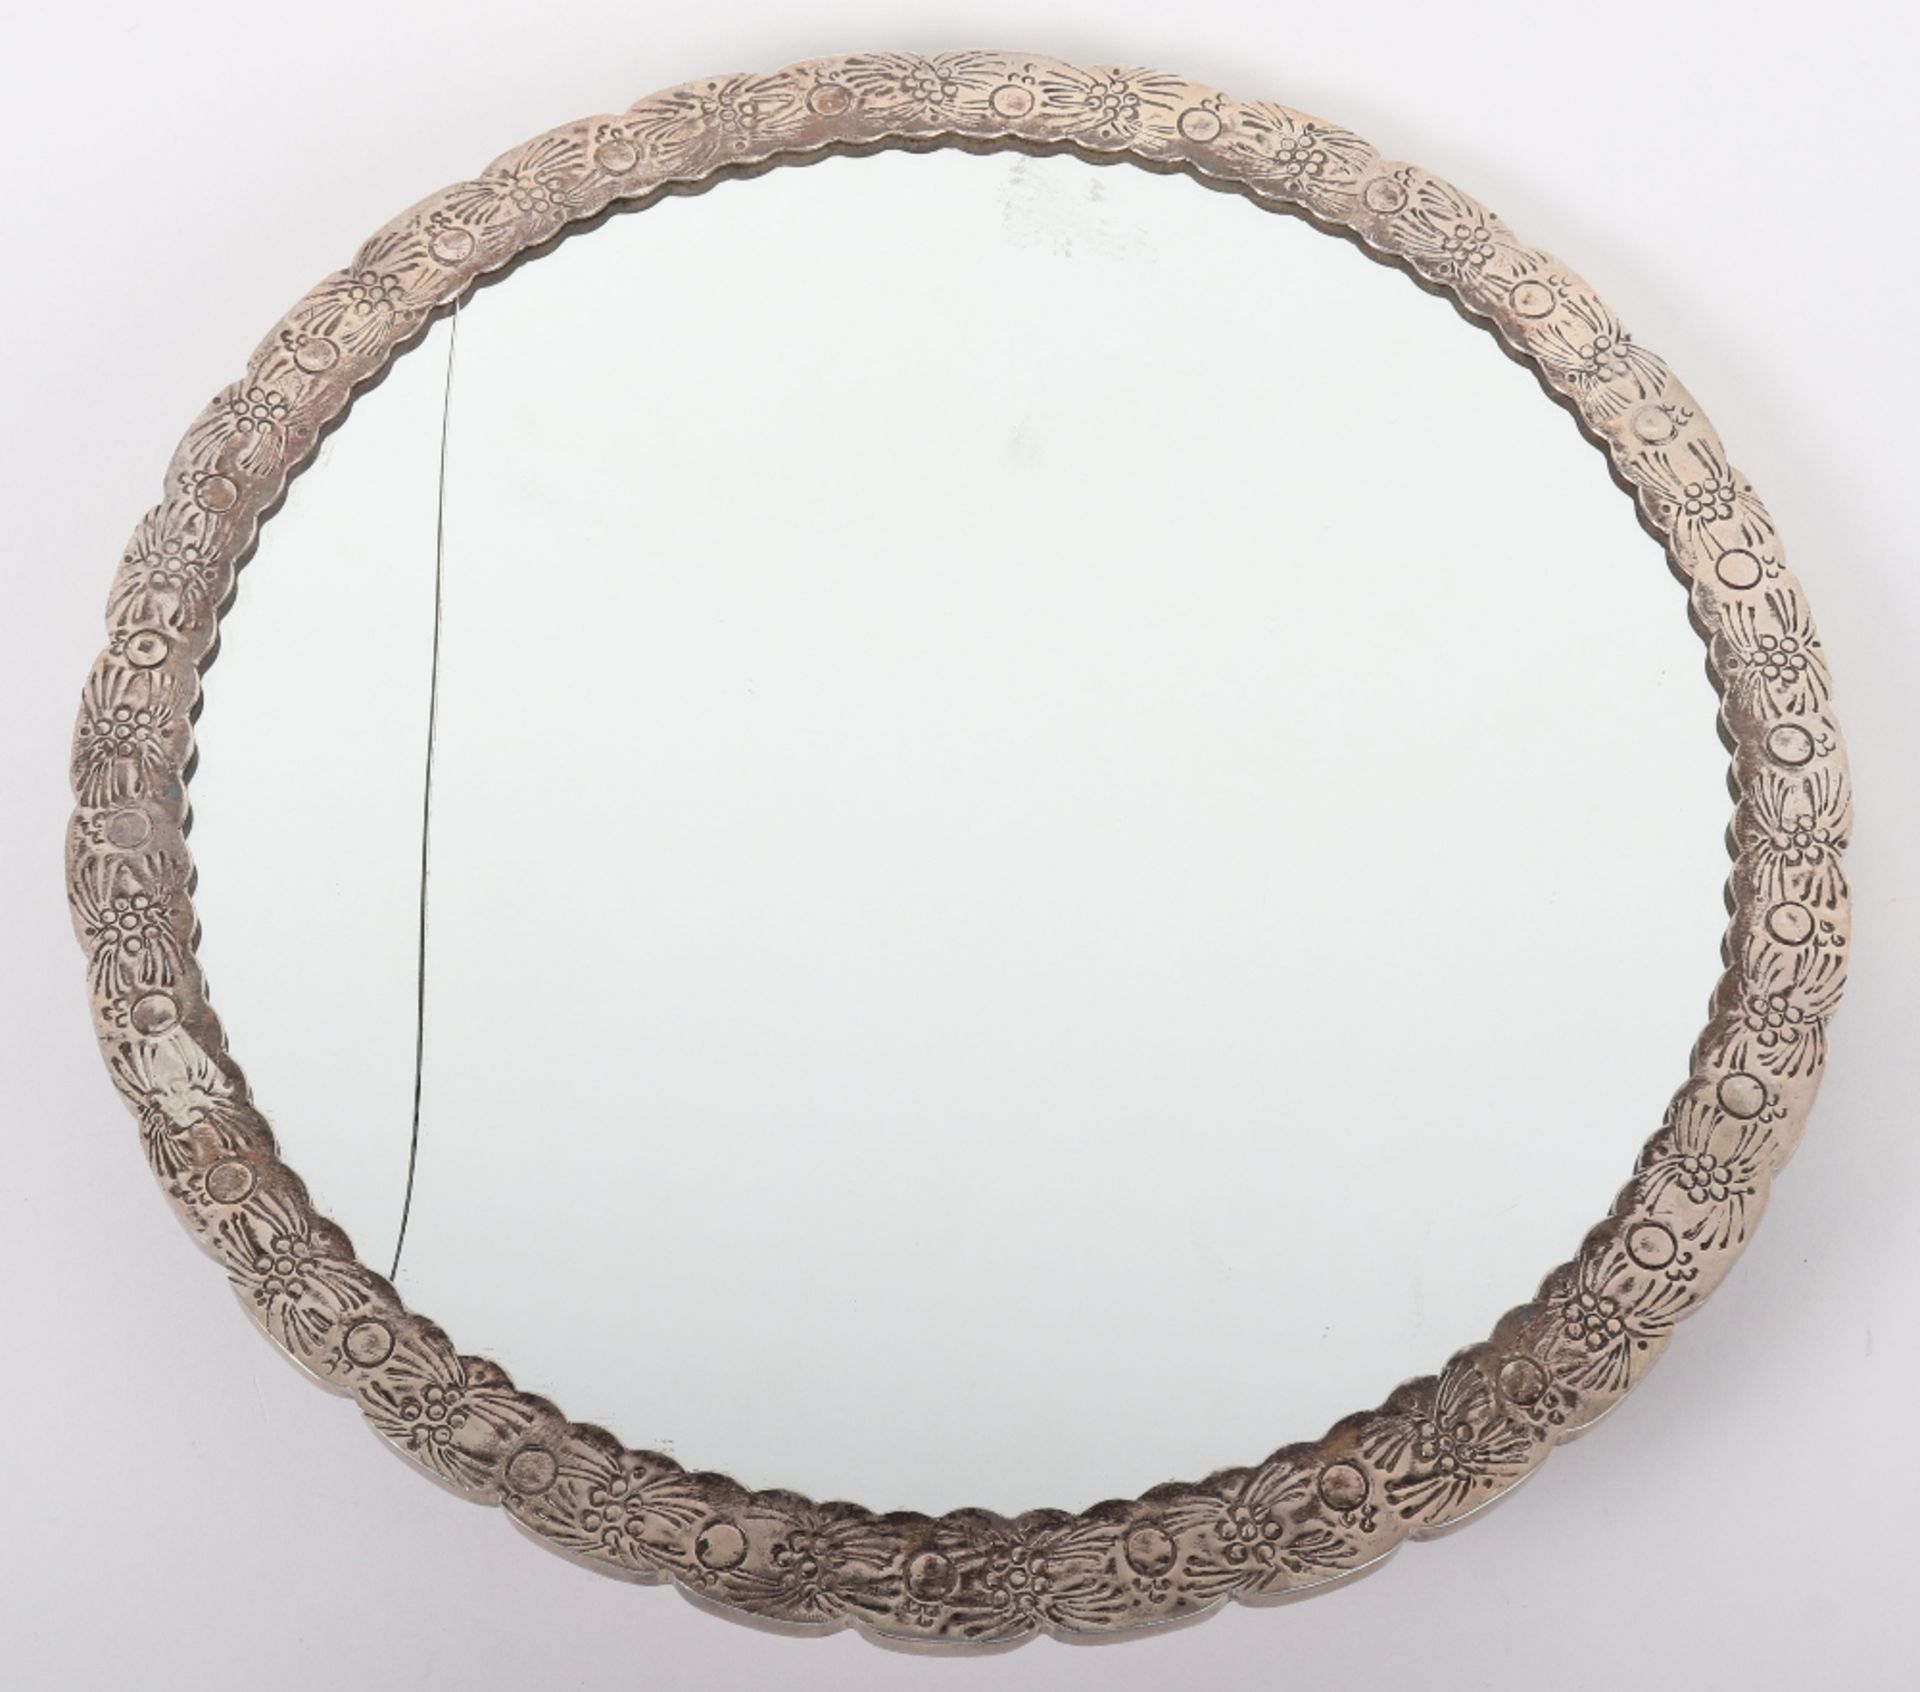 A Turkish silver circular mirror